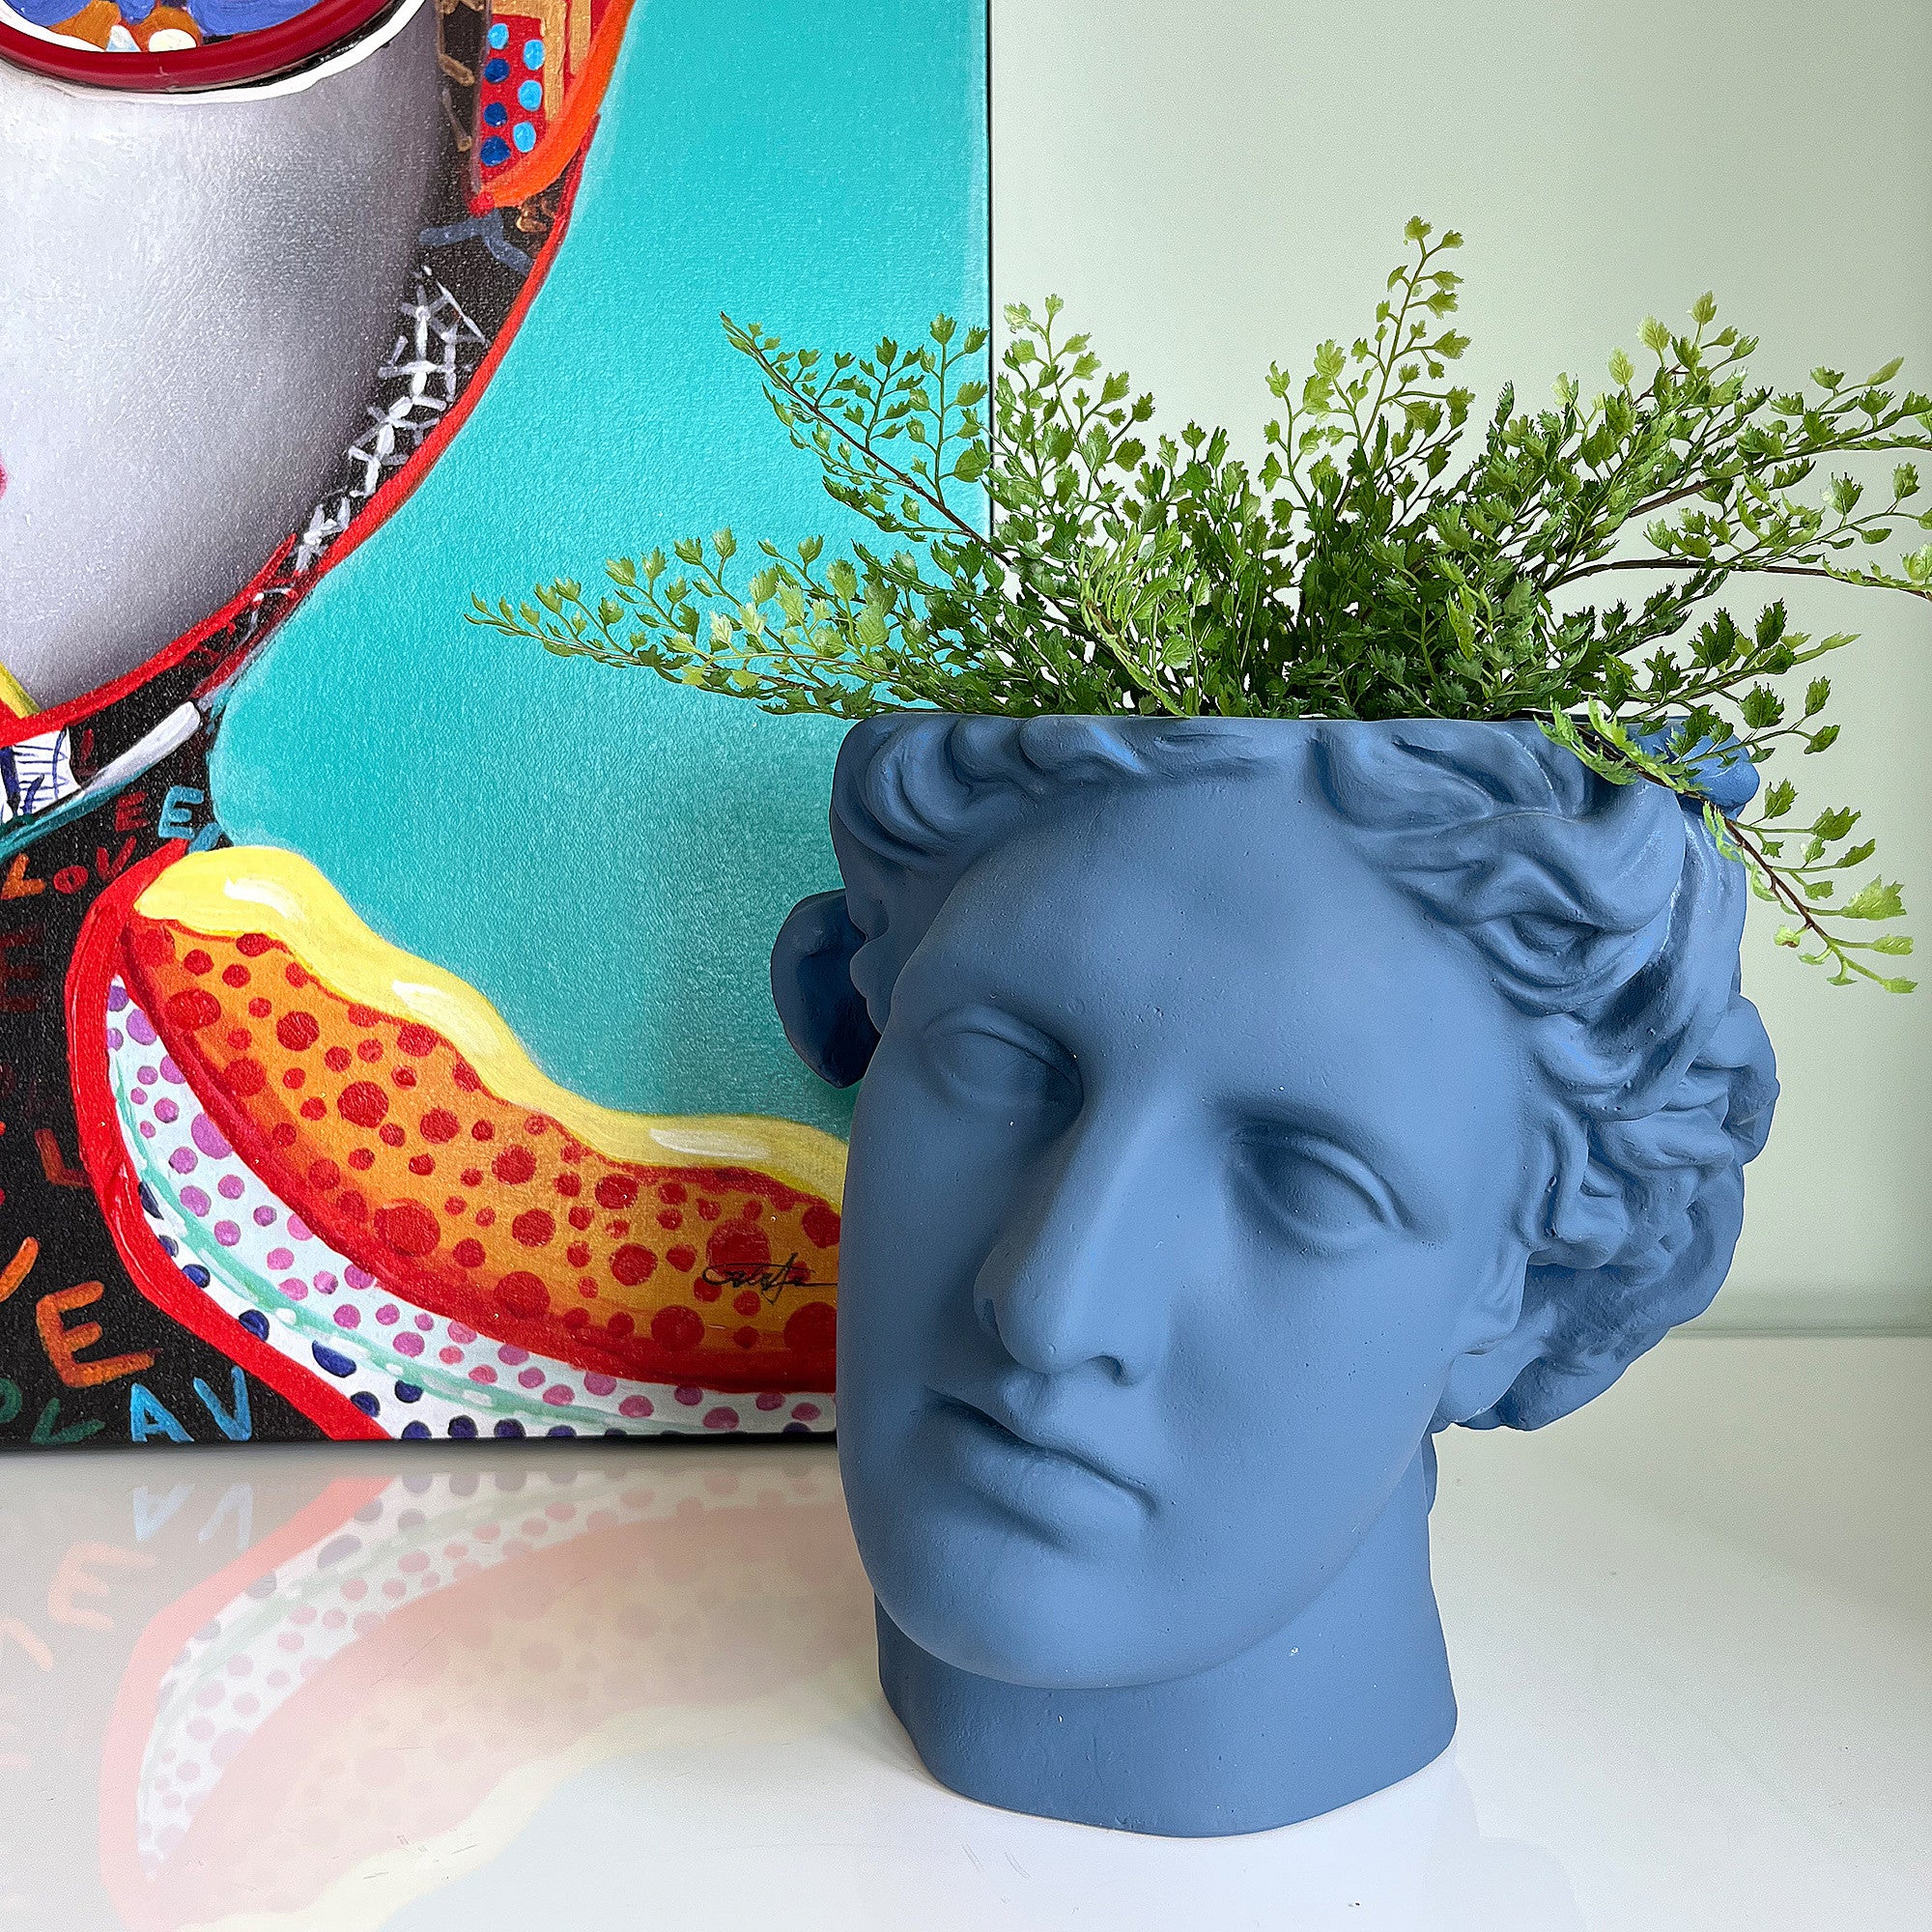 Striking Classical Head Blue Bust Planter